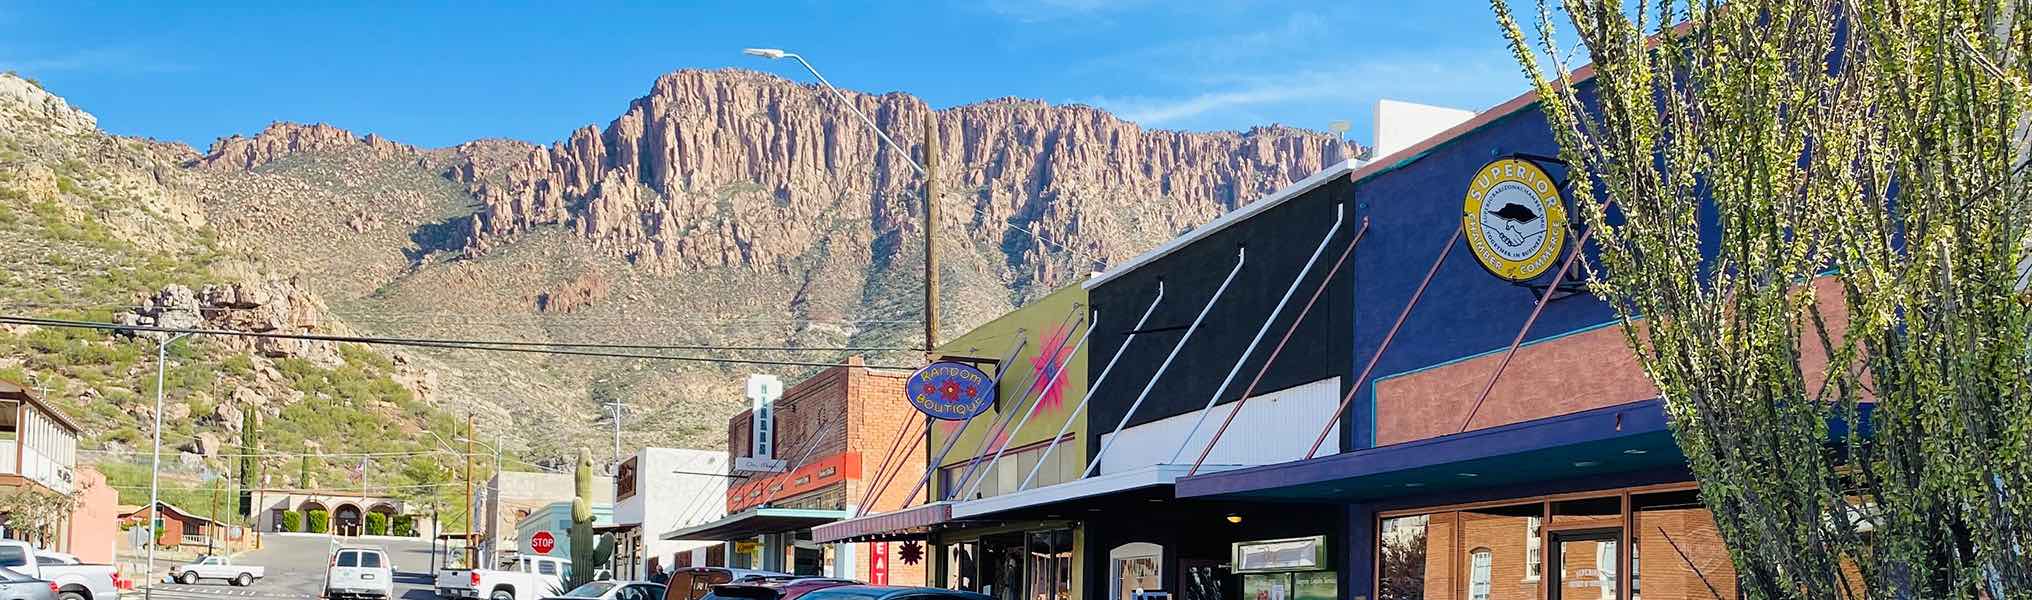 A city street with a mountain backdrop in Superior, AZ.